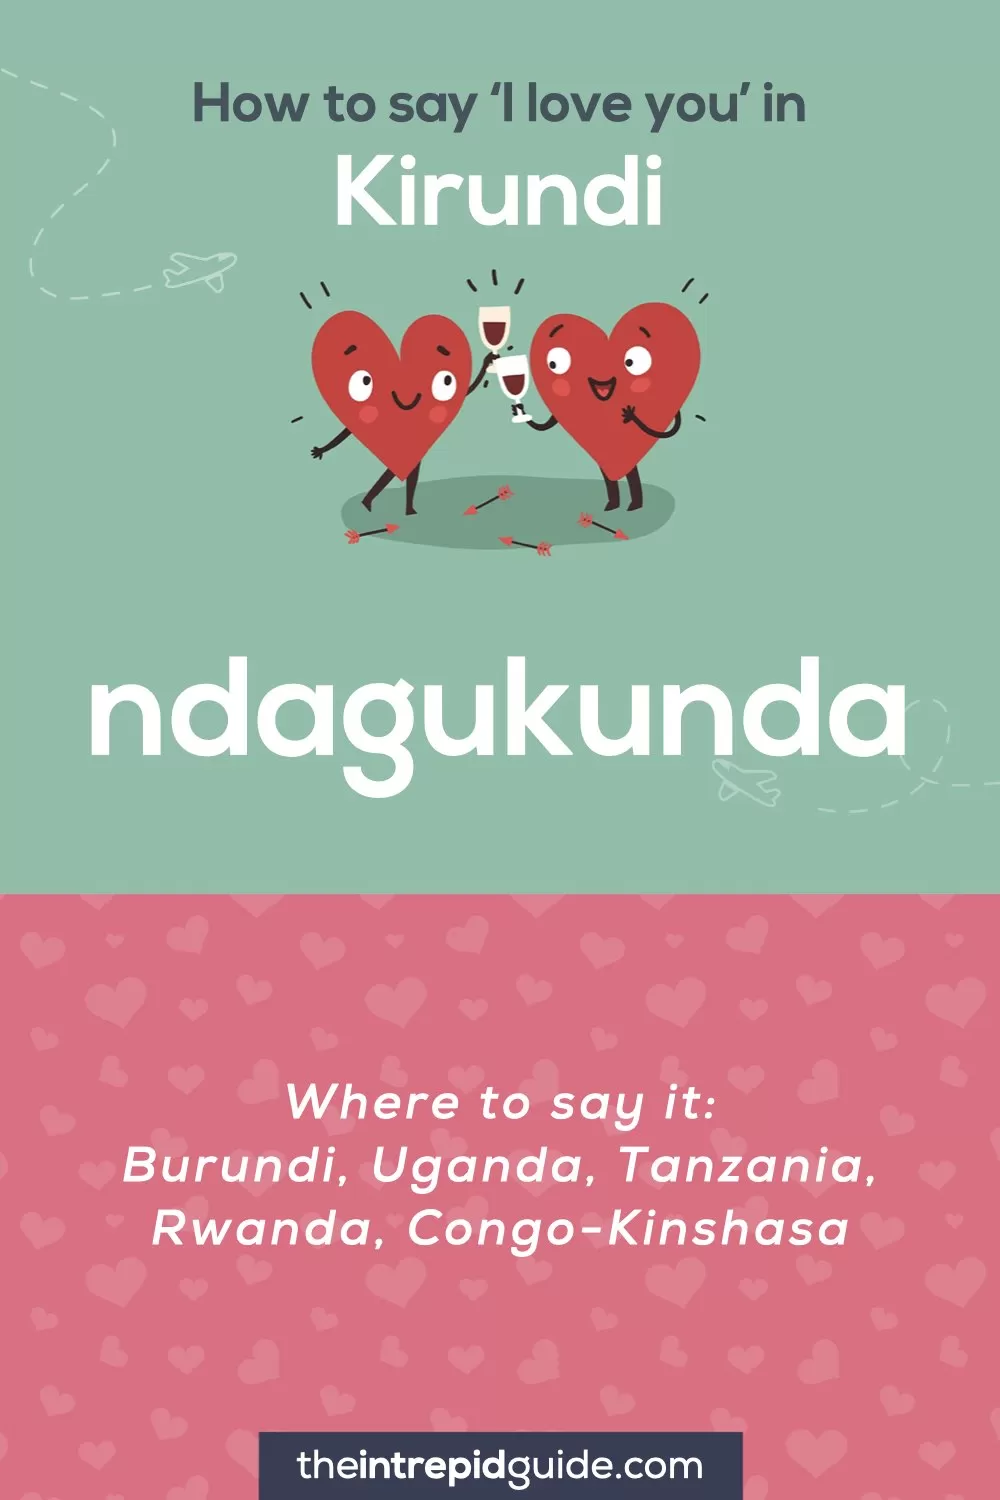 How to say I love you in different languages - Kirundi - ndagukunda